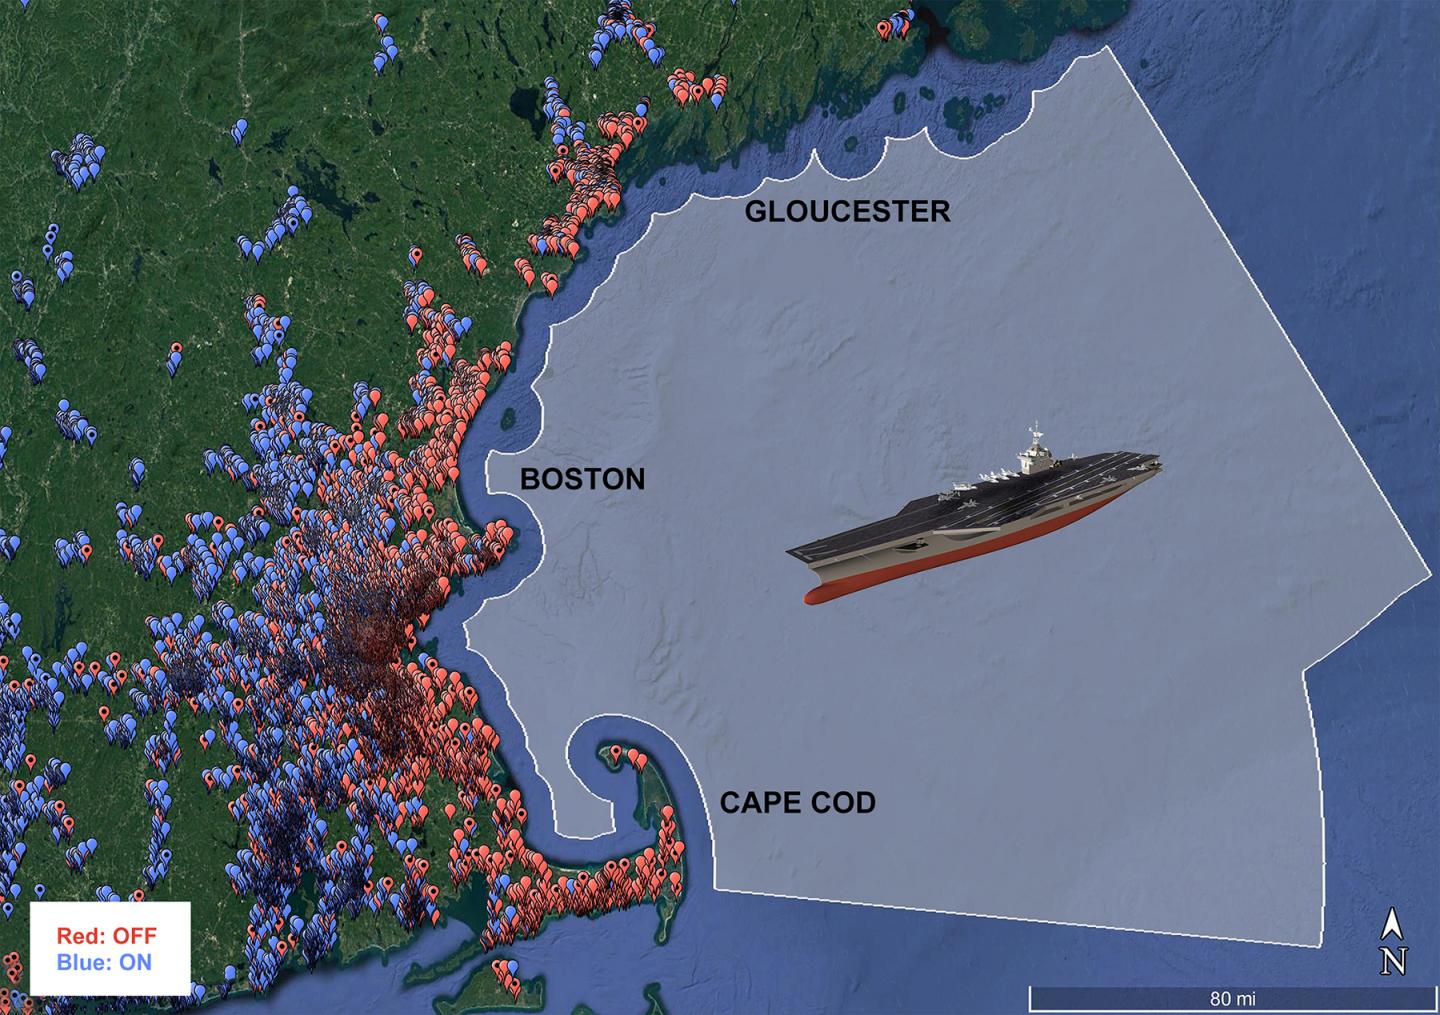 NIST Simulation Showing Shared Spectrum Use Along Massachusetts Coast